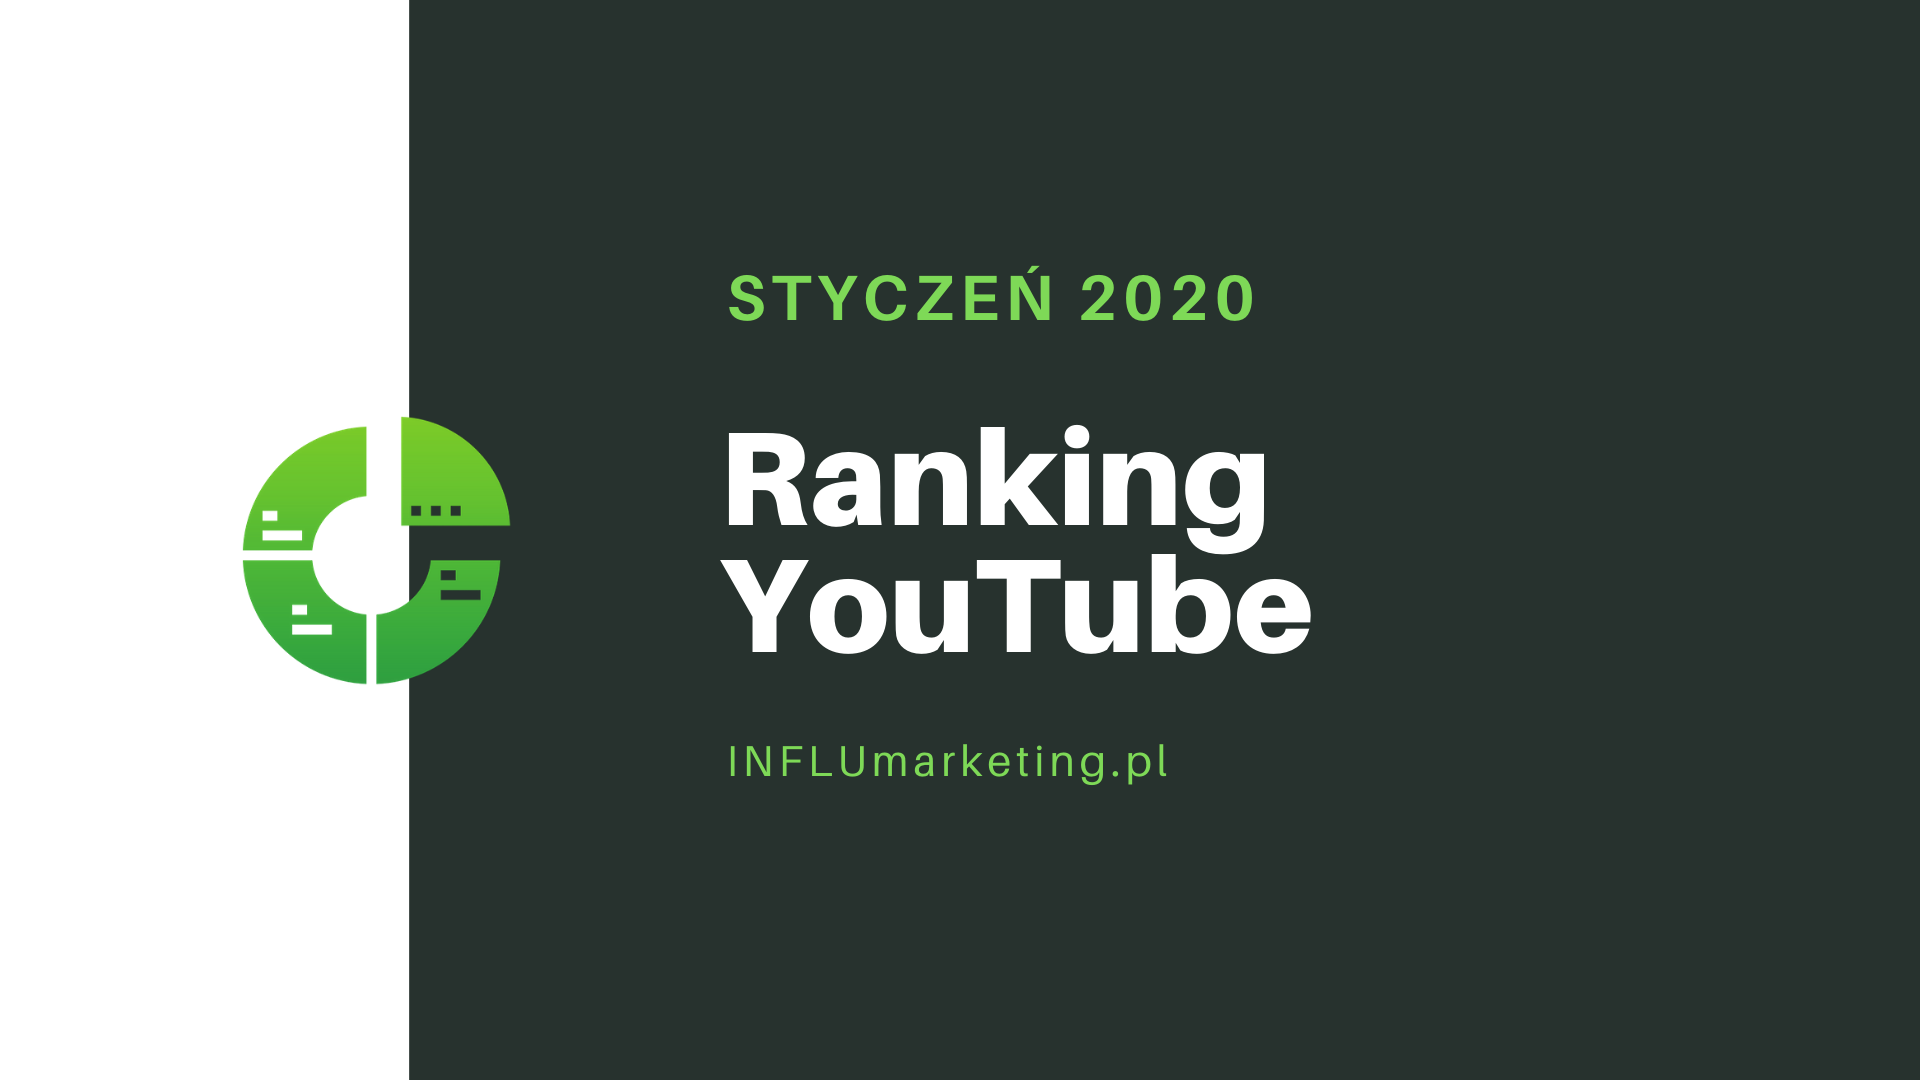 ranking youtube polska 2020 cover photo